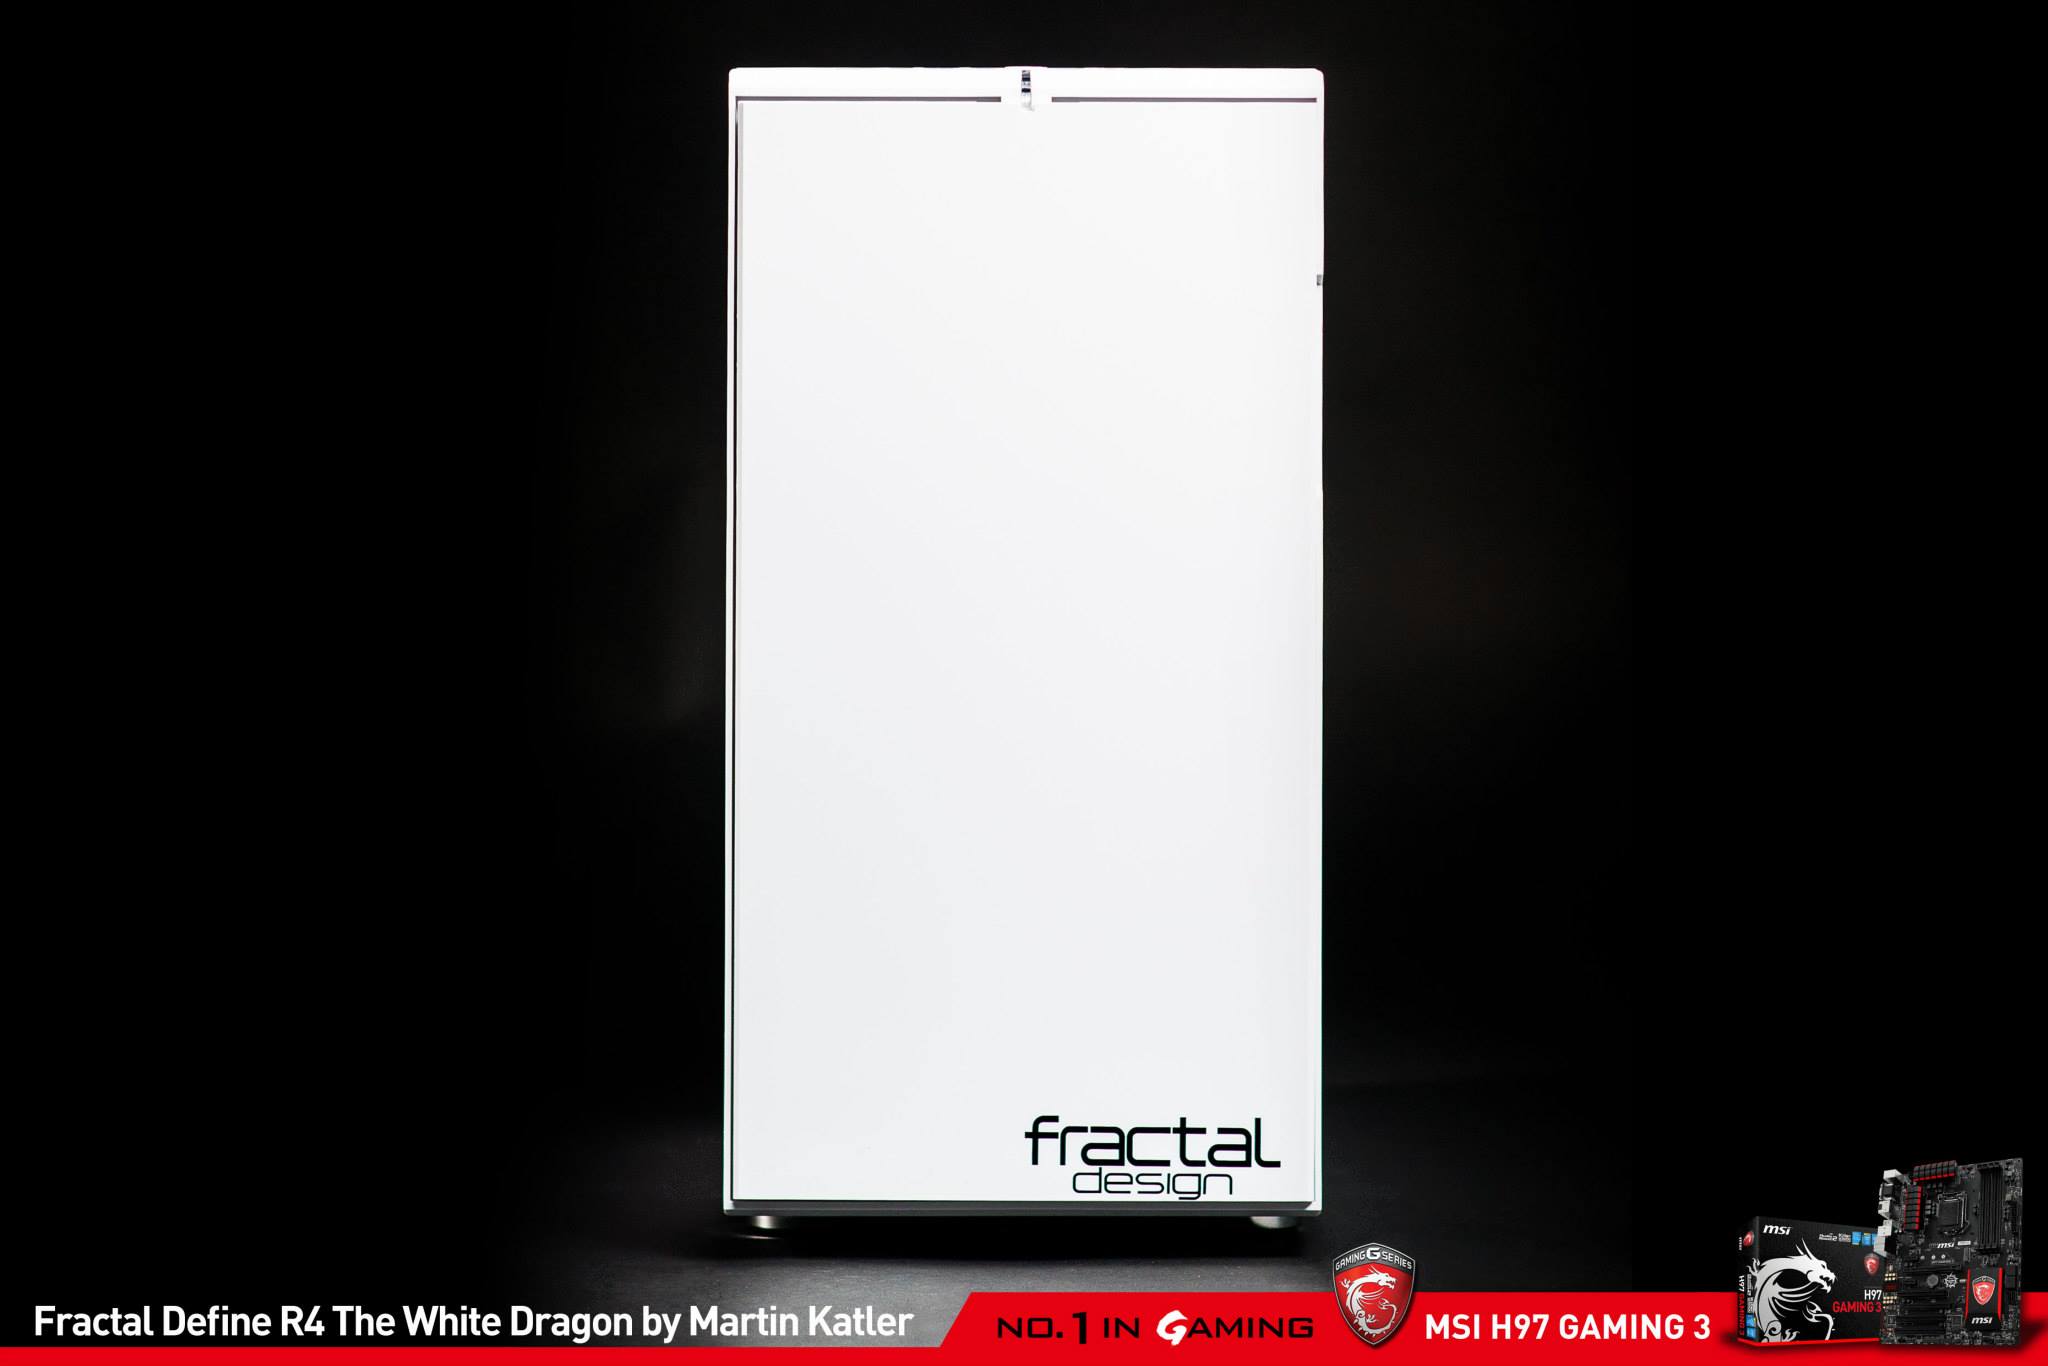 Featured Build: Fractal Define R4 The White Dragon